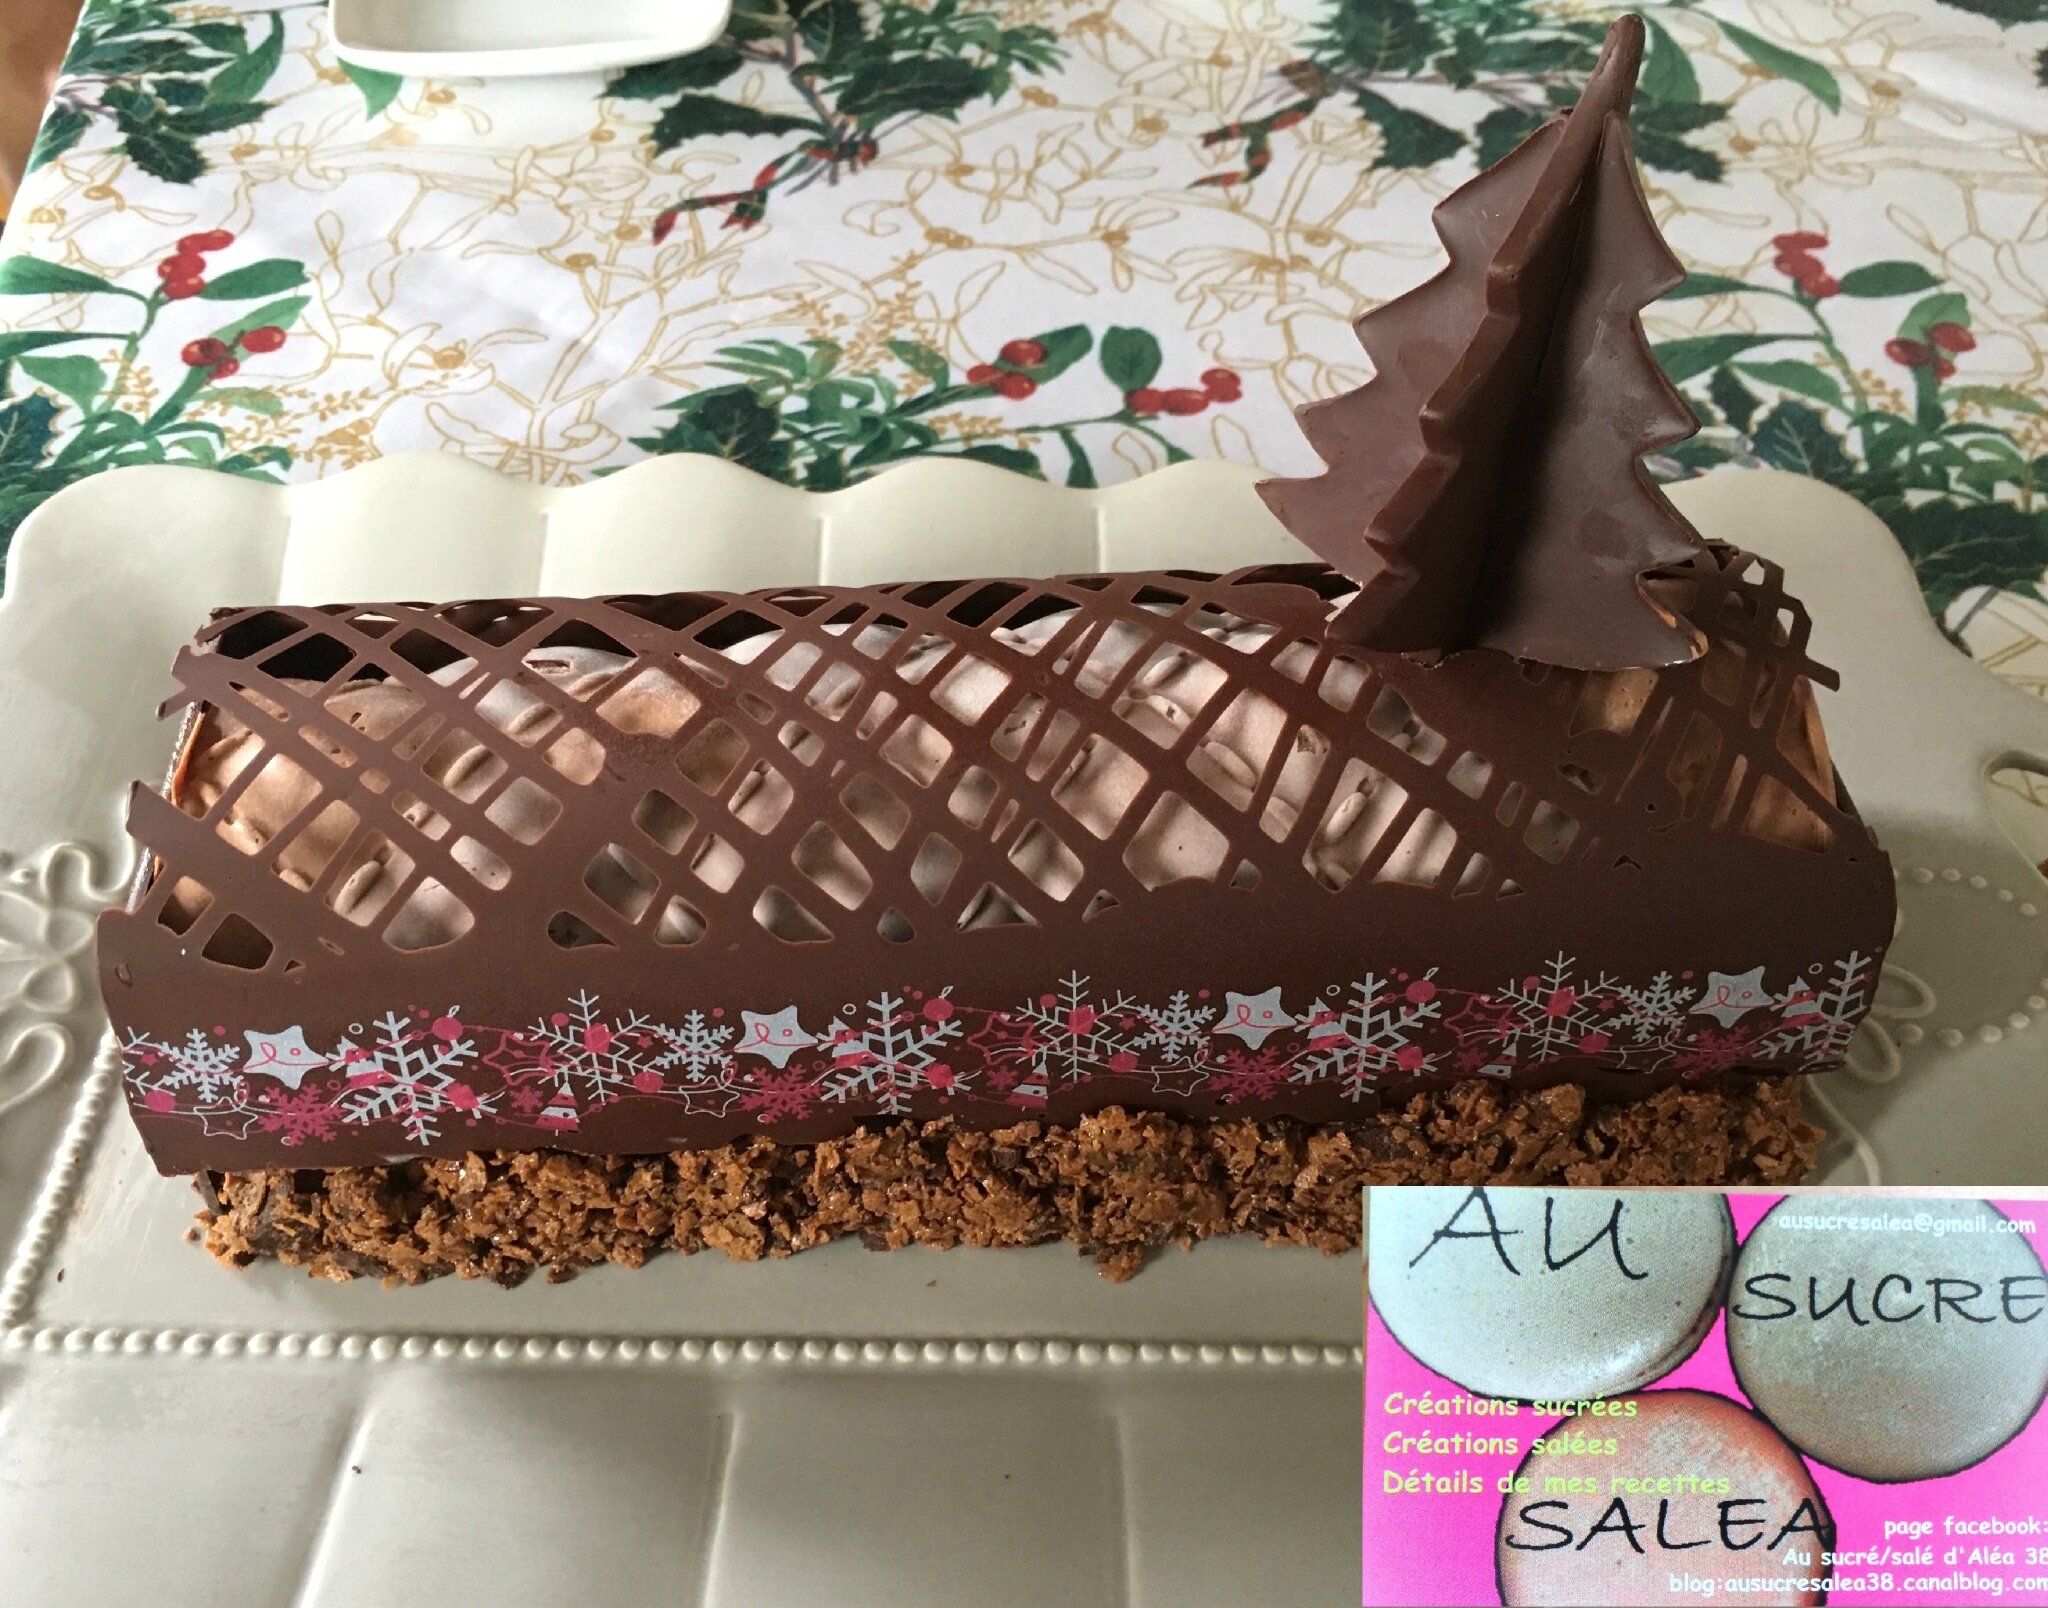 LAYER CAKE KINDER BUENO - NUTELLA - Au sucrésalé d'Aléa 38